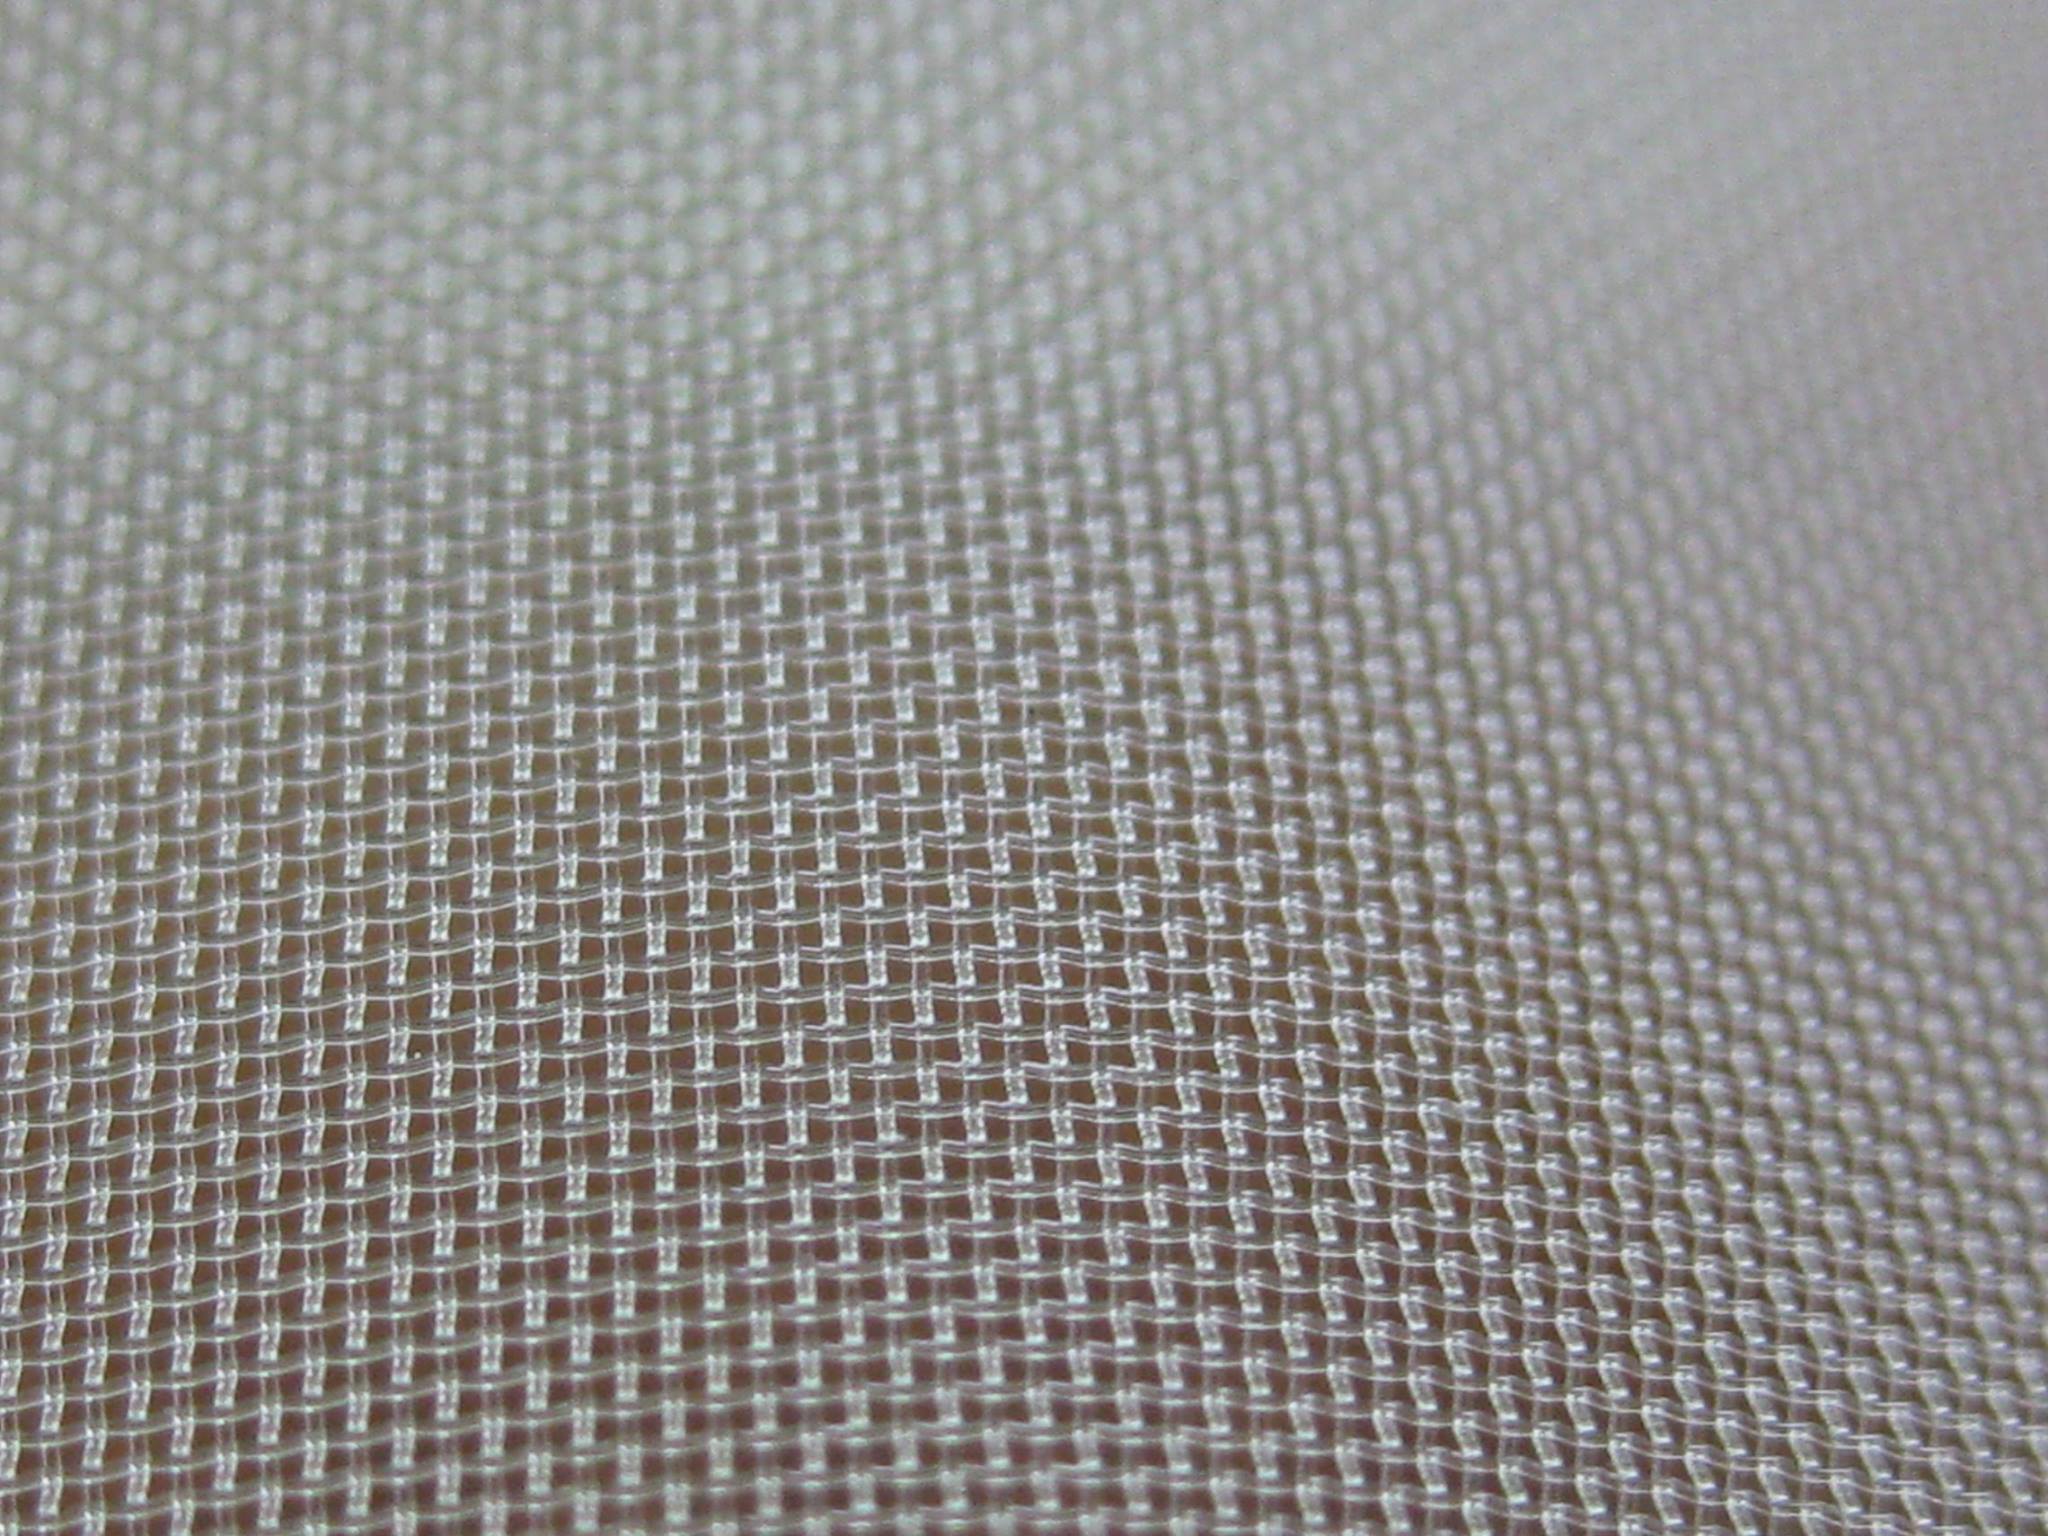 Honey Straining Cloth, 425 microns, width 122cm.